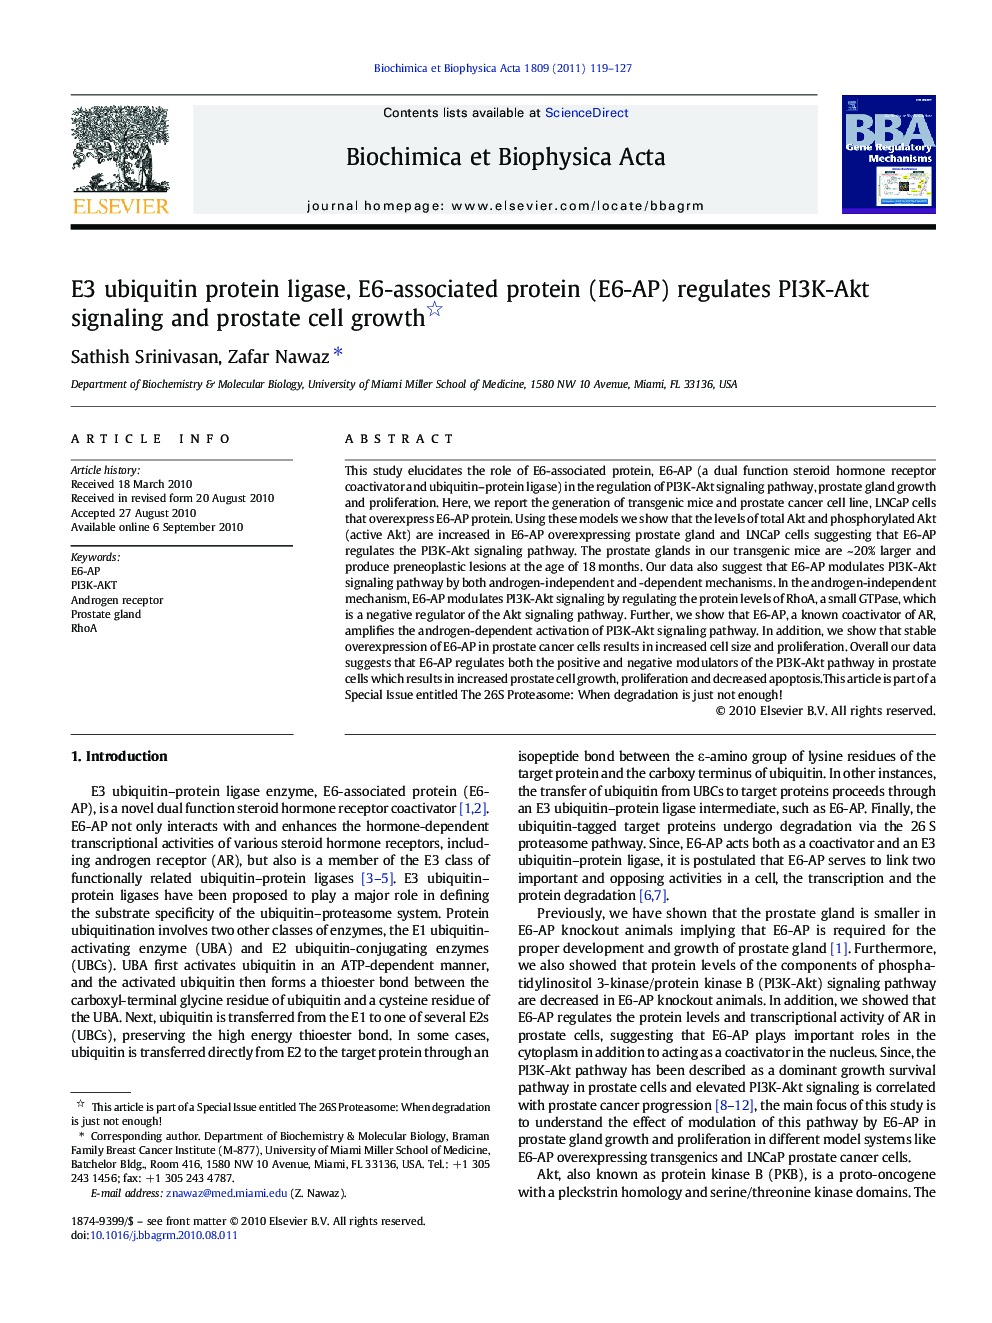 E3 ubiquitin protein ligase, E6-associated protein (E6-AP) regulates PI3K-Akt signaling and prostate cell growth 